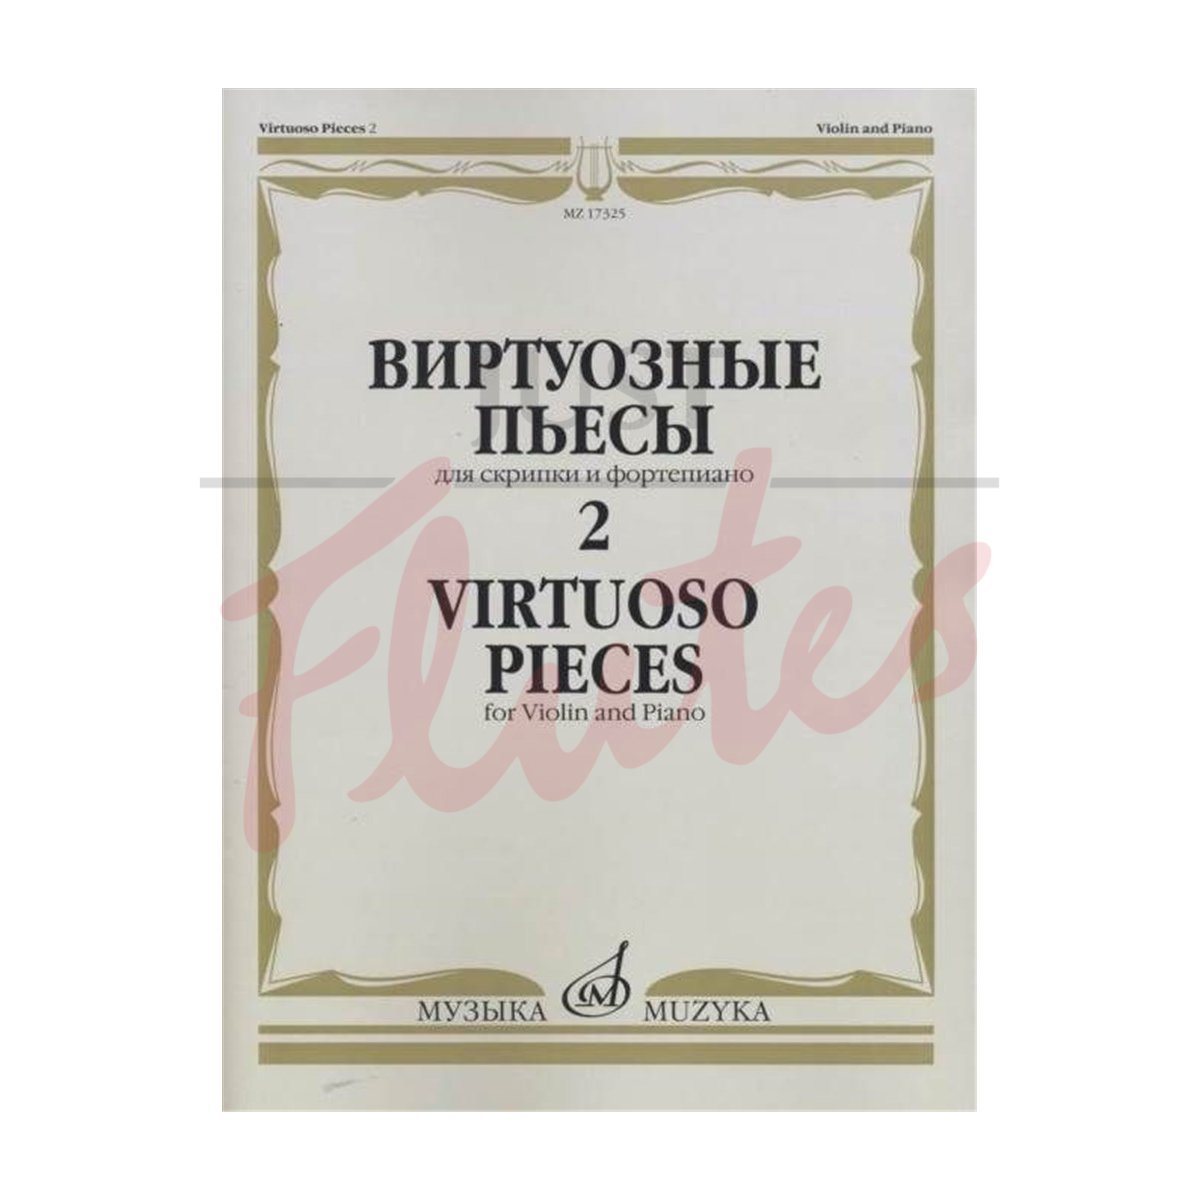 Virtuoso Pieces for Violin and Piano, Volume 2